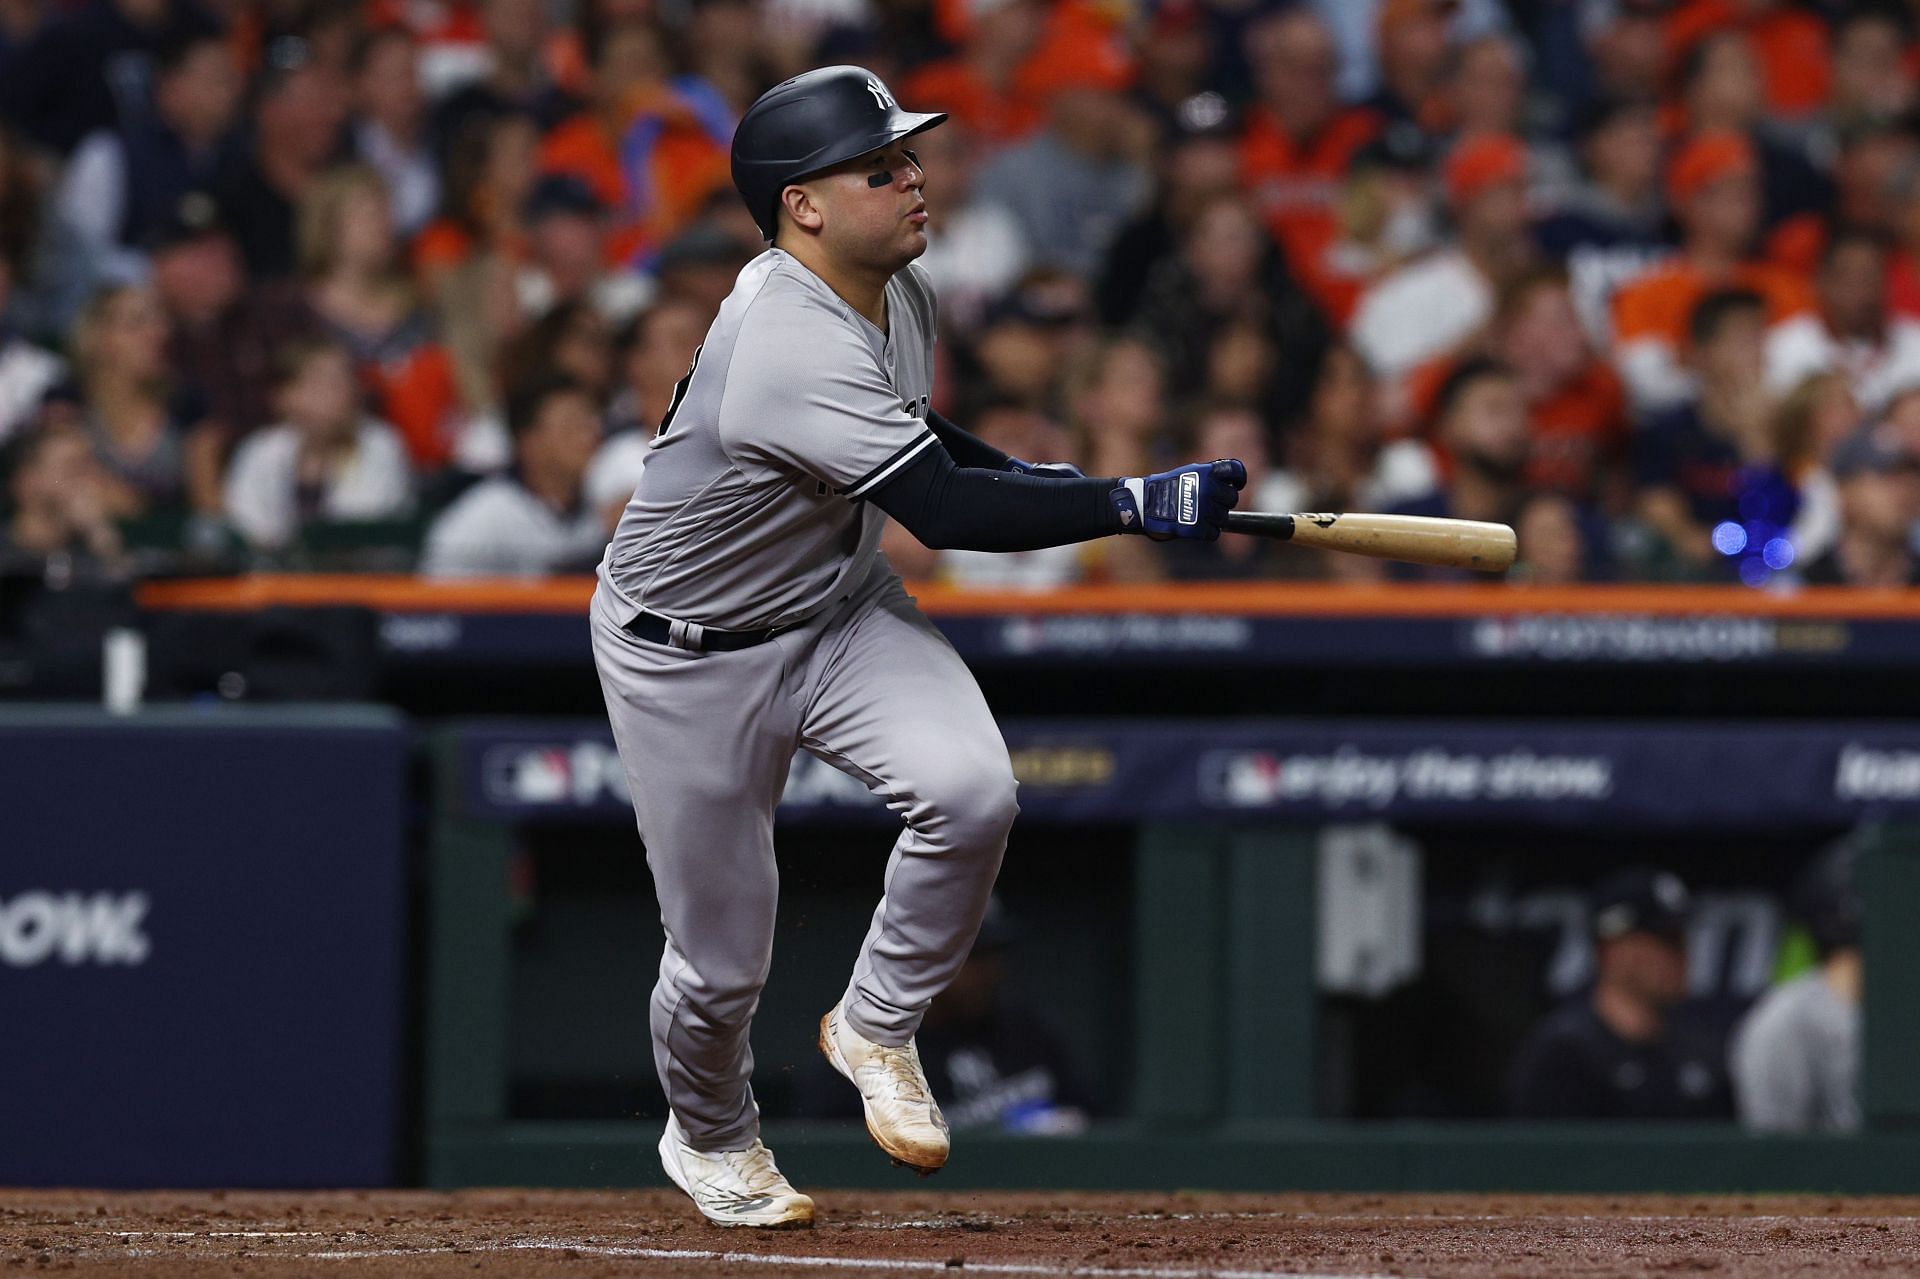 Jose Trevino's clutch hit in 11th helps Yankees snap skid